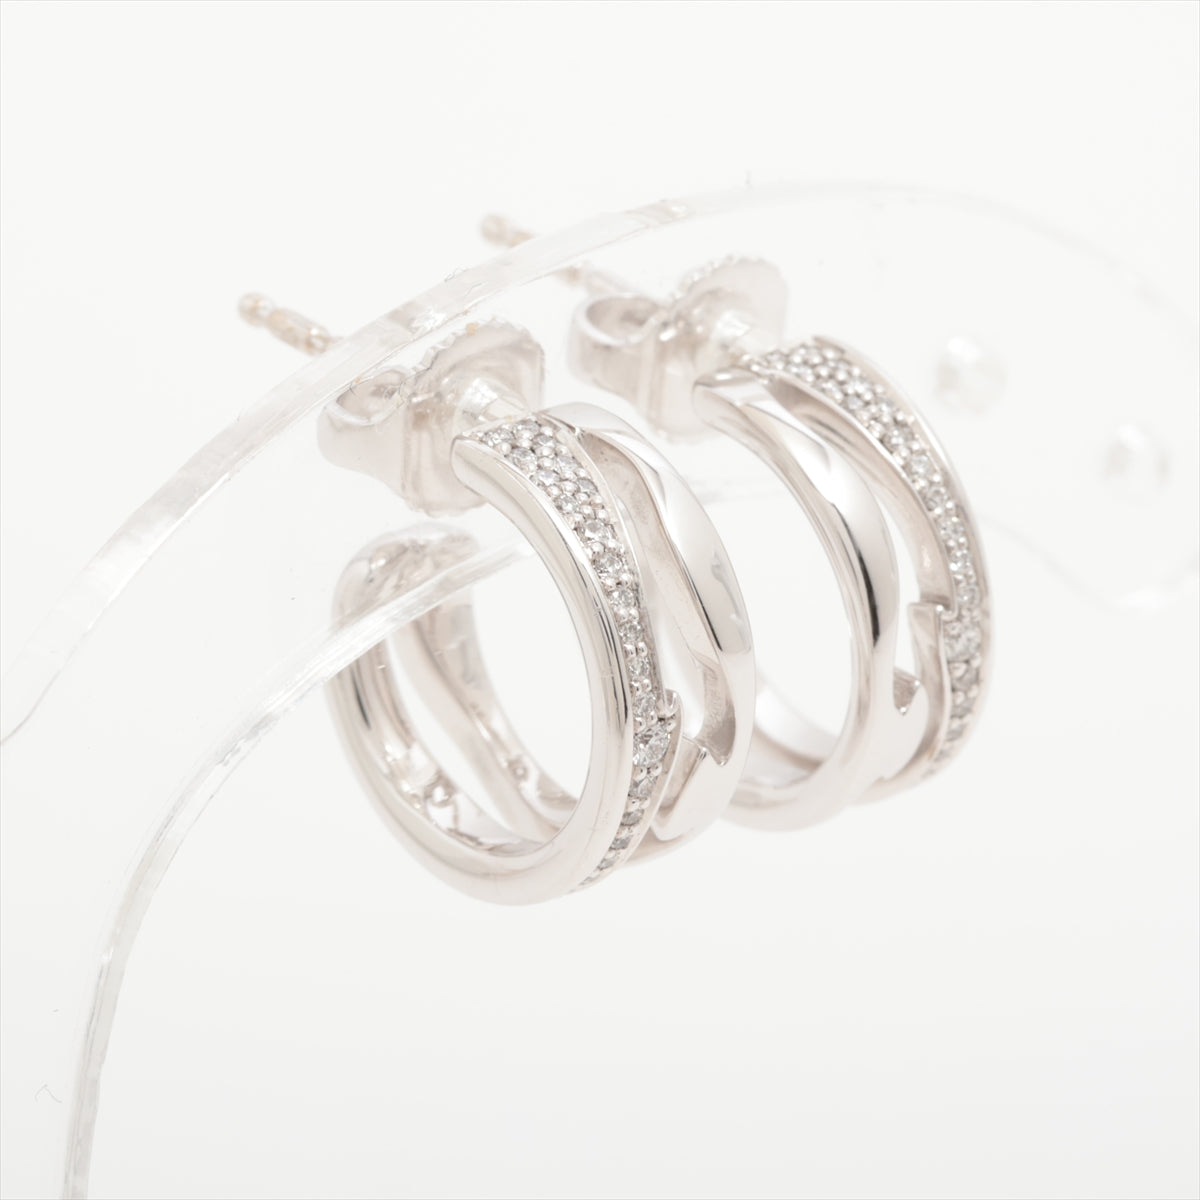 Georg Jensen Fusion Piercing jewelry (for both ears) 750 5.2g Guaranteed diamond